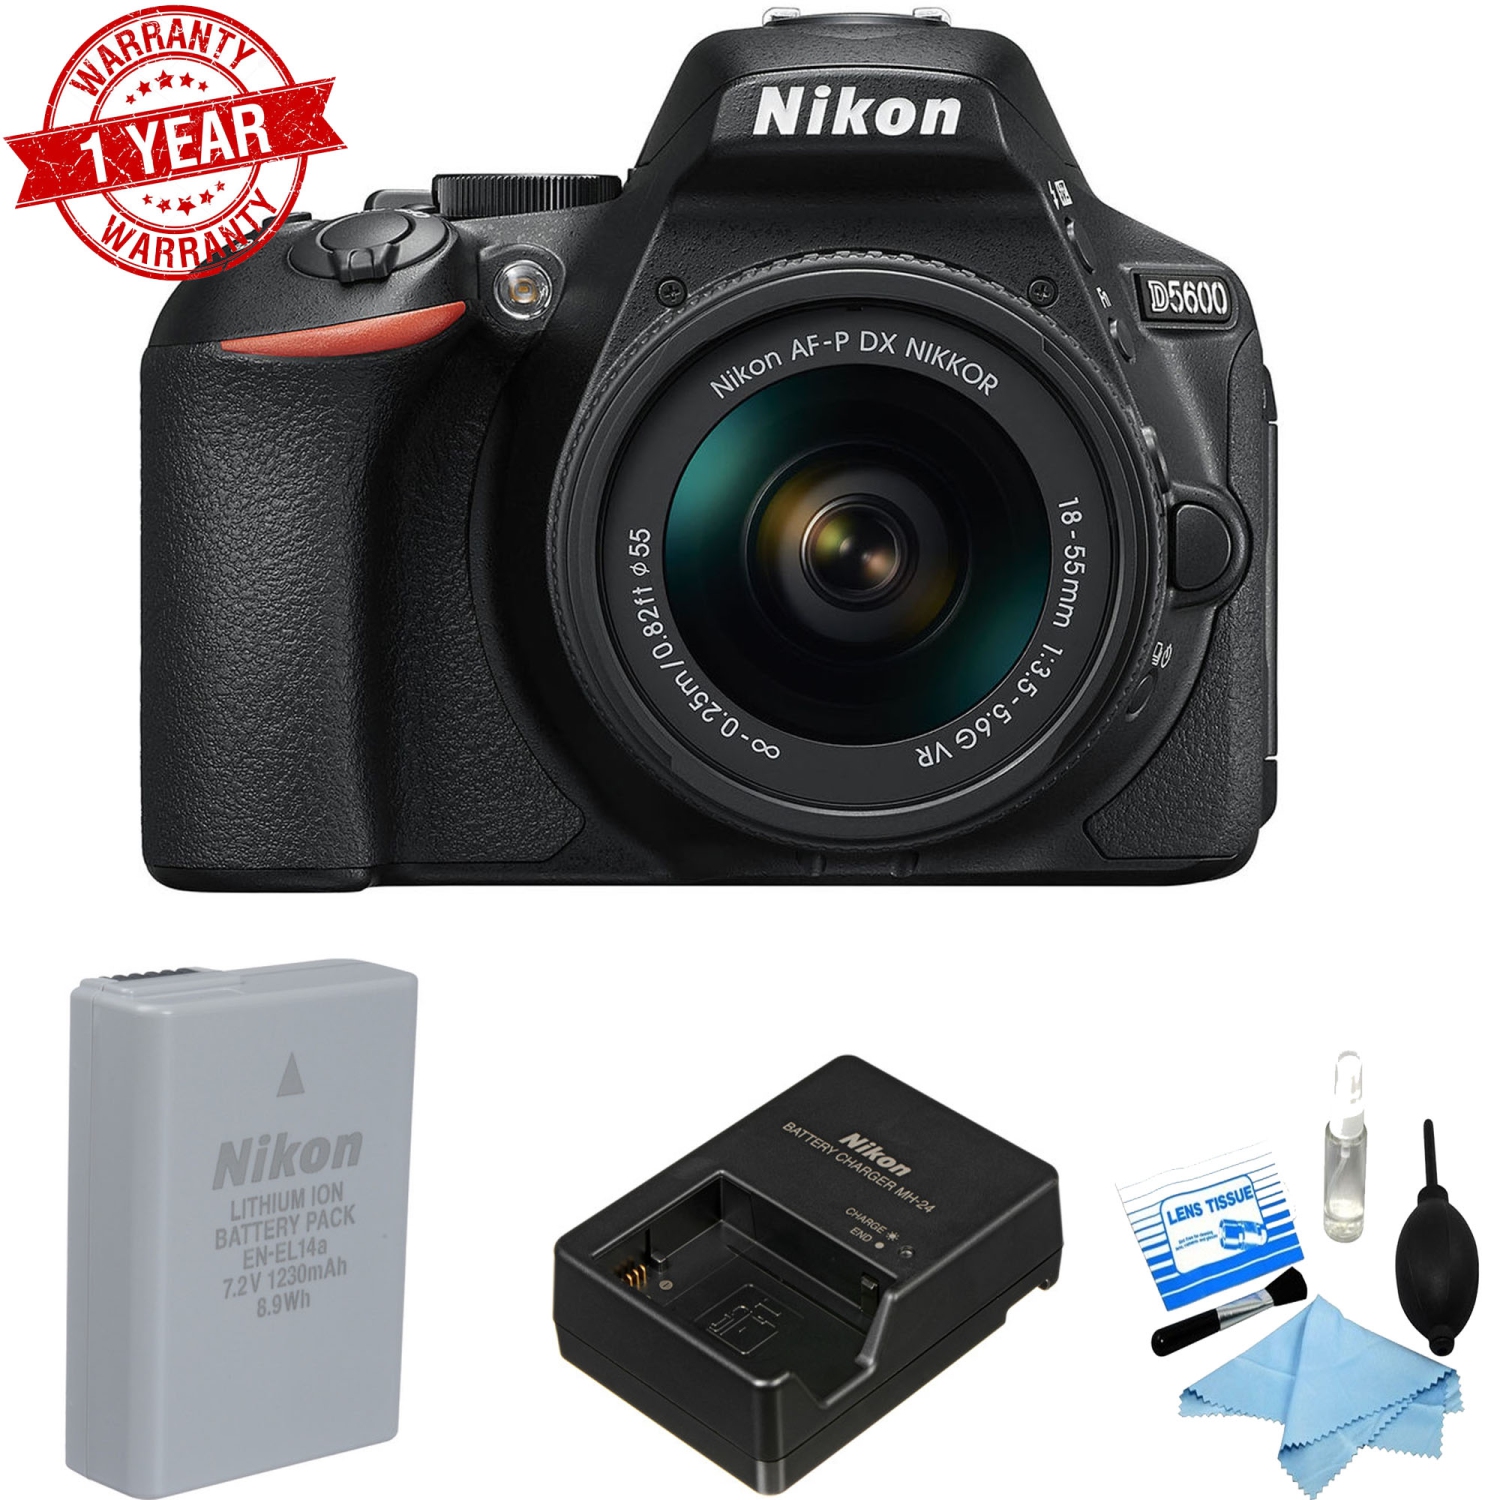 Nikon D5600 DSLR Camera with 18-55mm Lens (Black) USA W/ Cleaning Kit - US Version w/ Seller Warranty